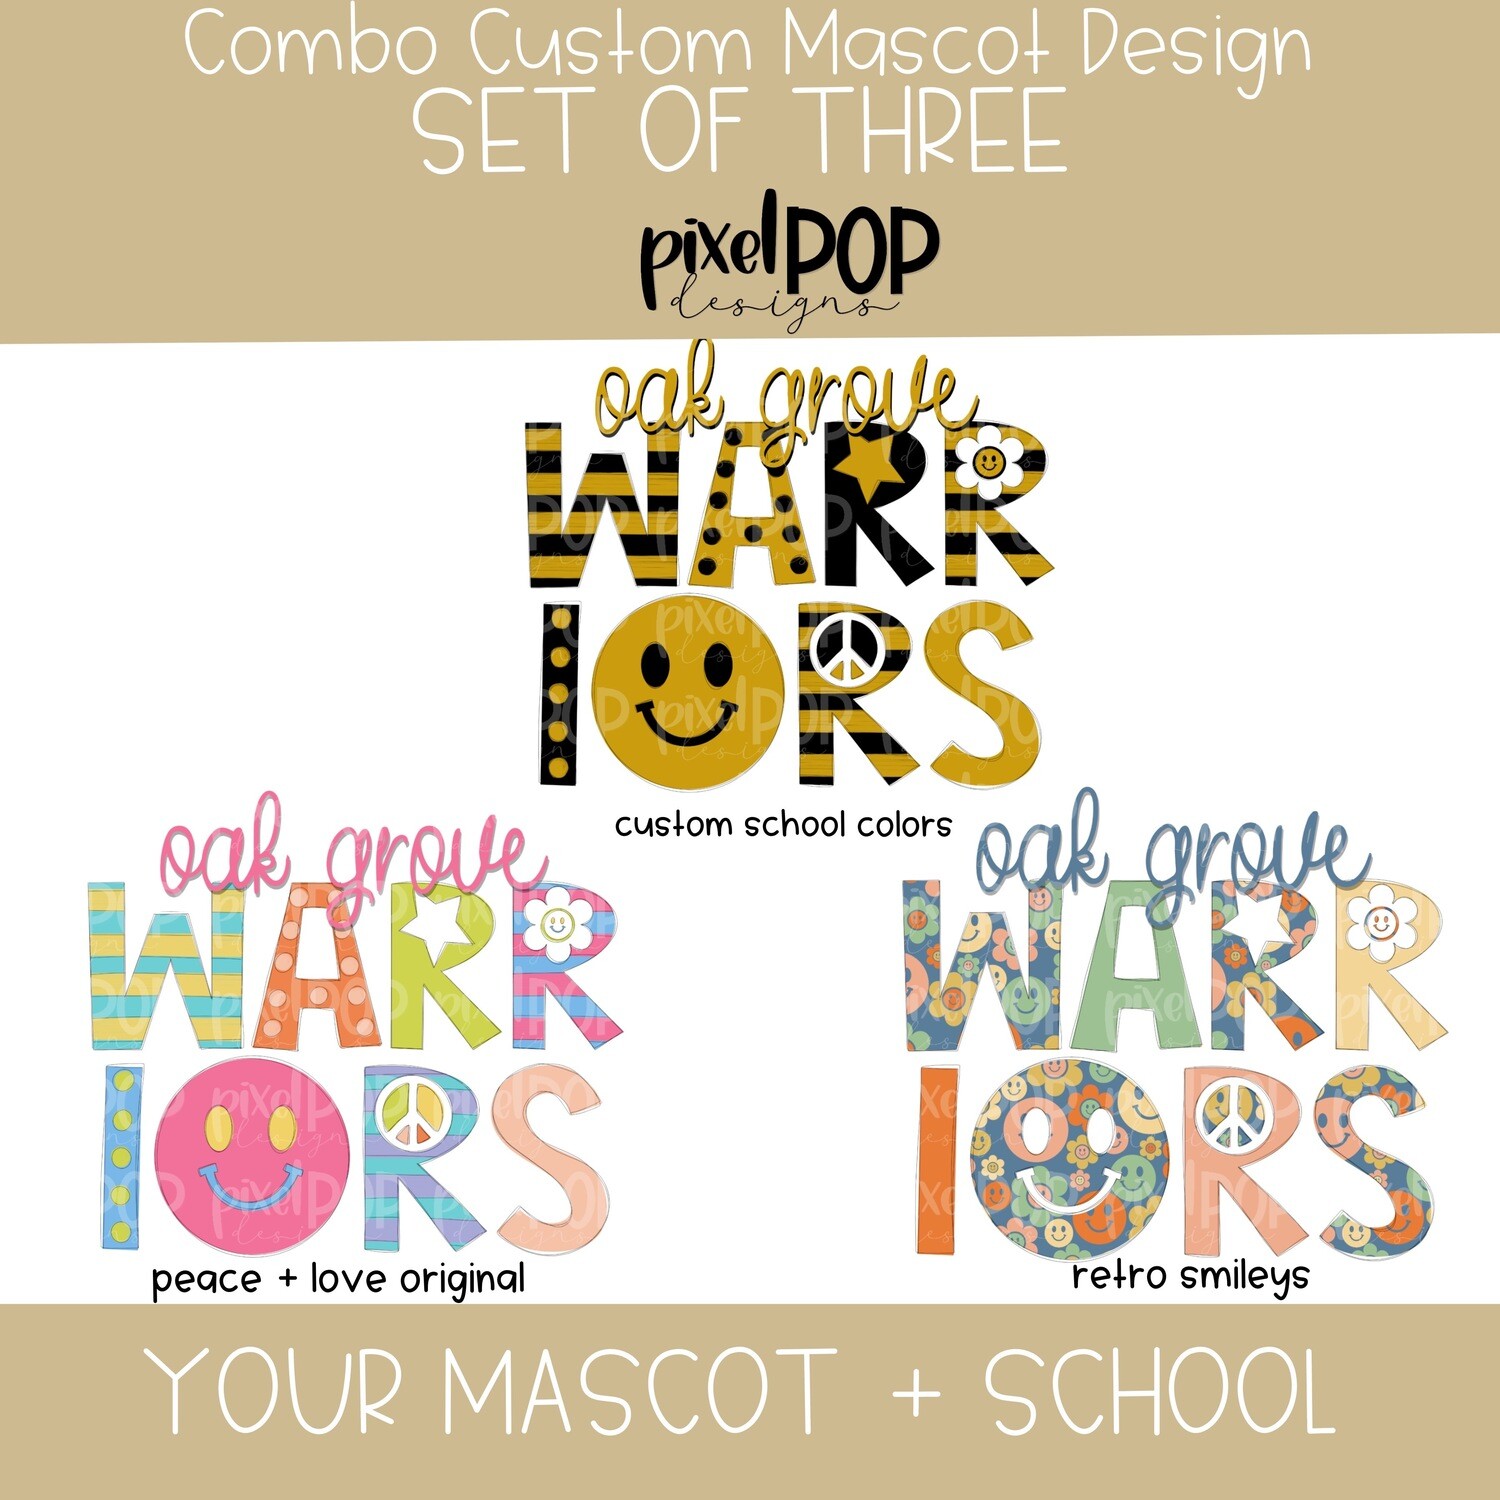 Set of THREE Mascot + School Images (Custom Colors, Peace + Love and Retro Smileys)